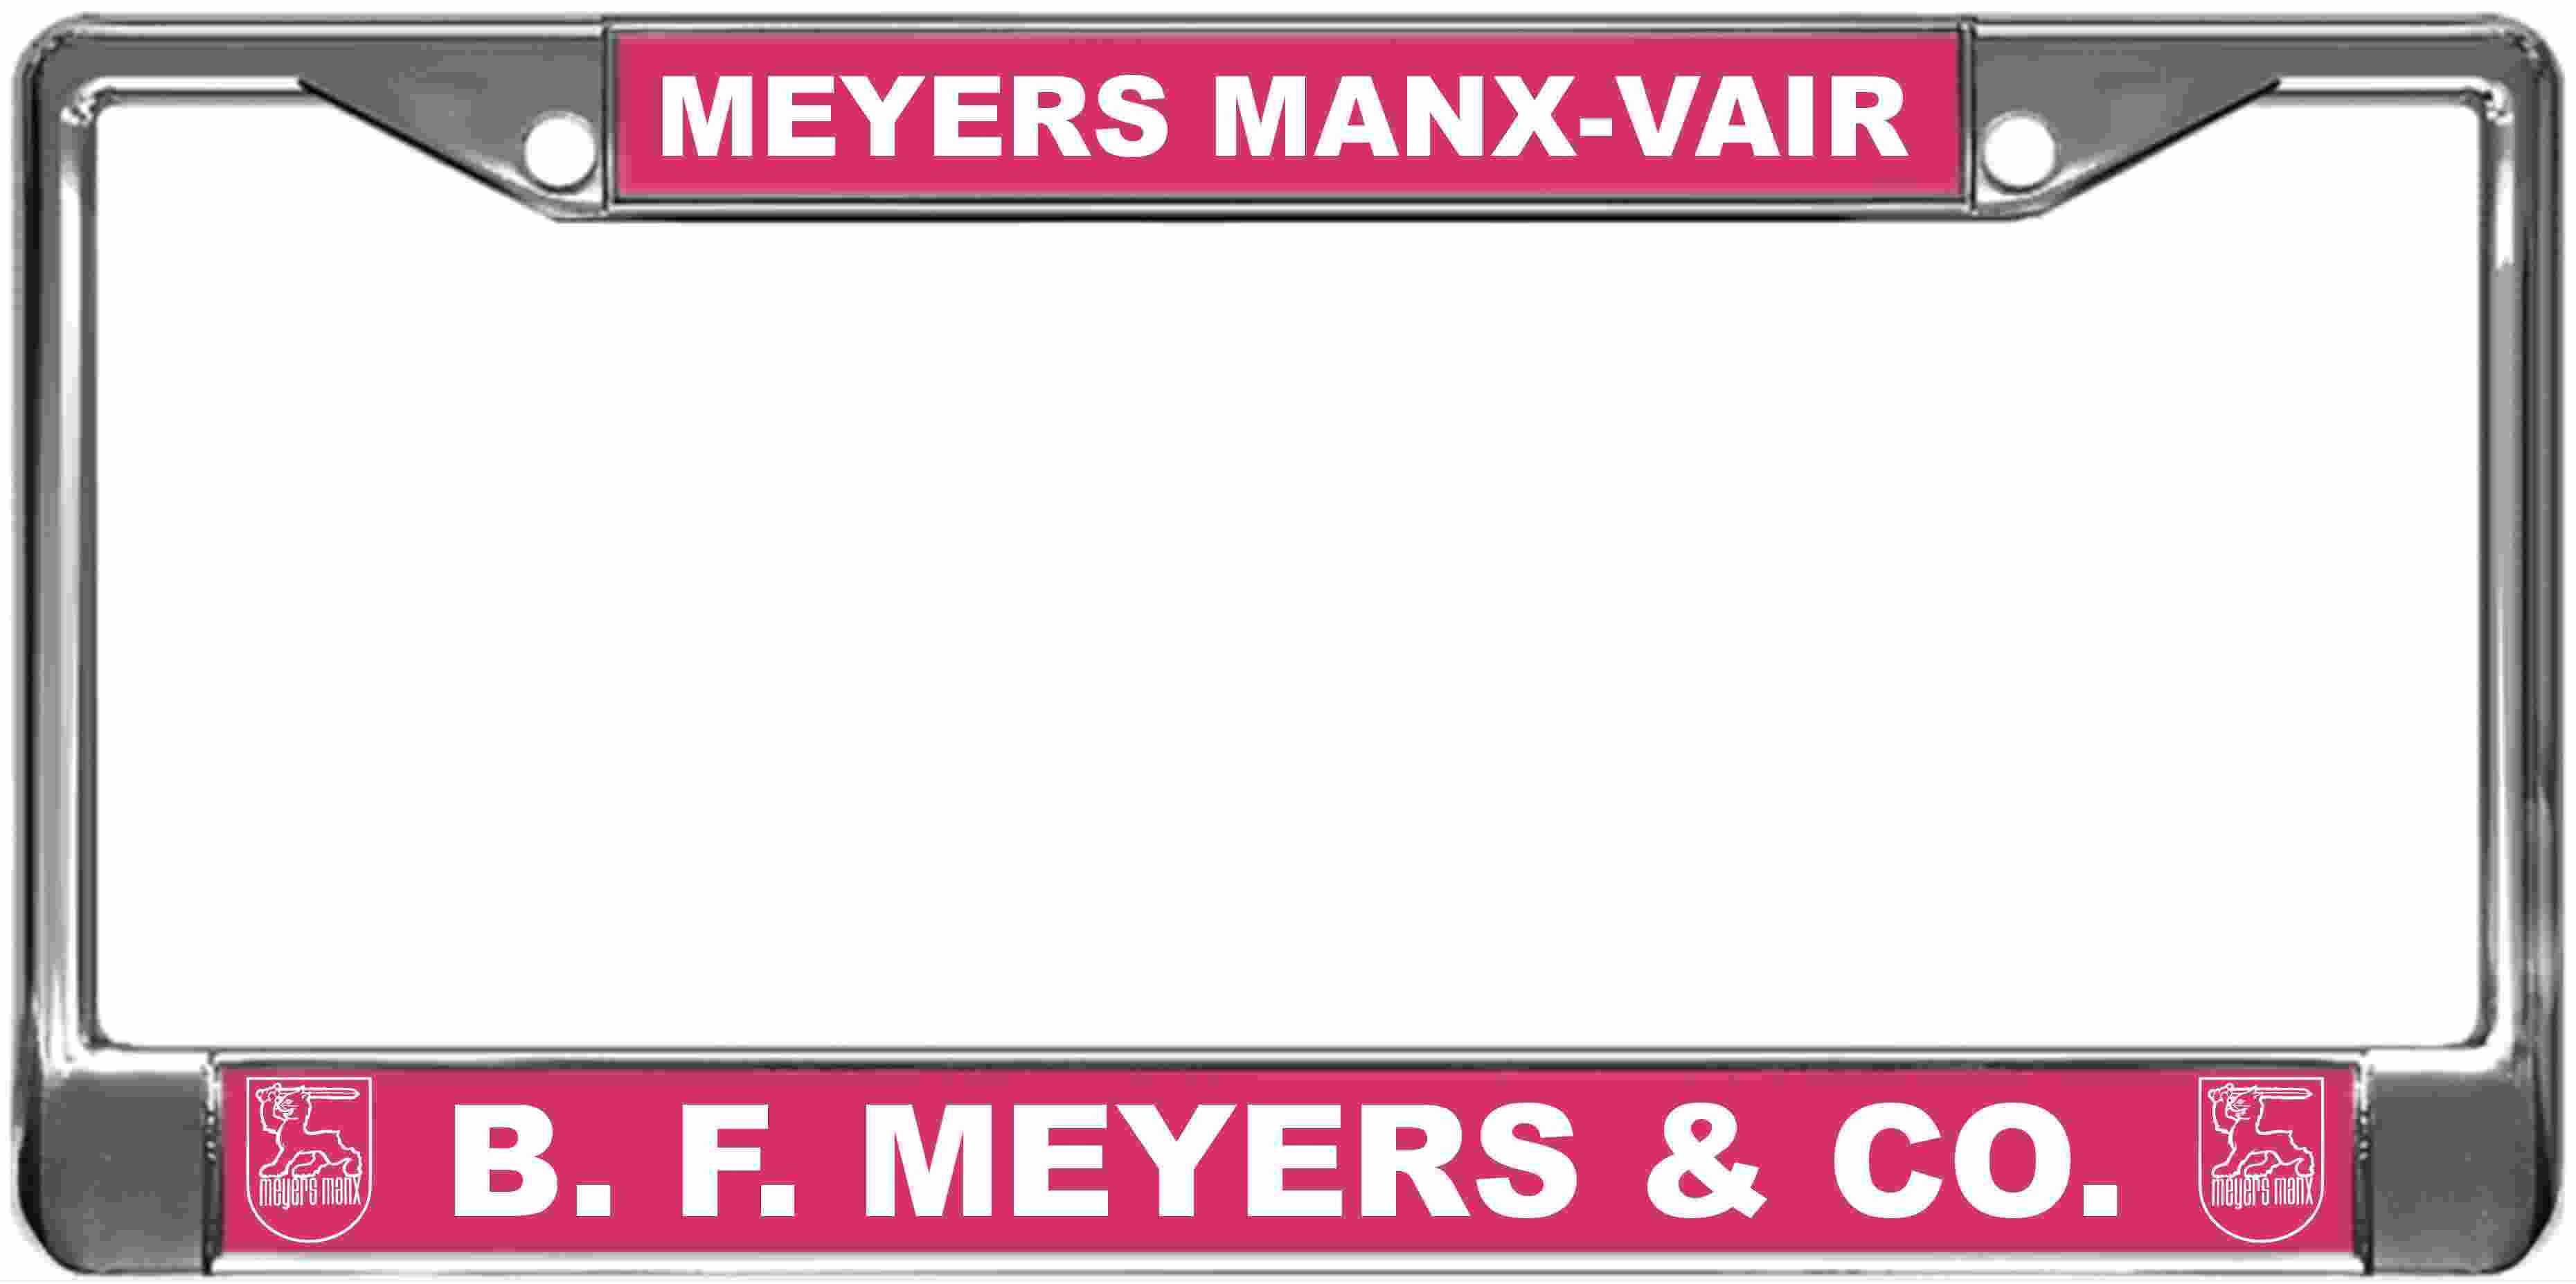 MEYERS MANX-VAIR - Custom metal license plate frames (set of 2)